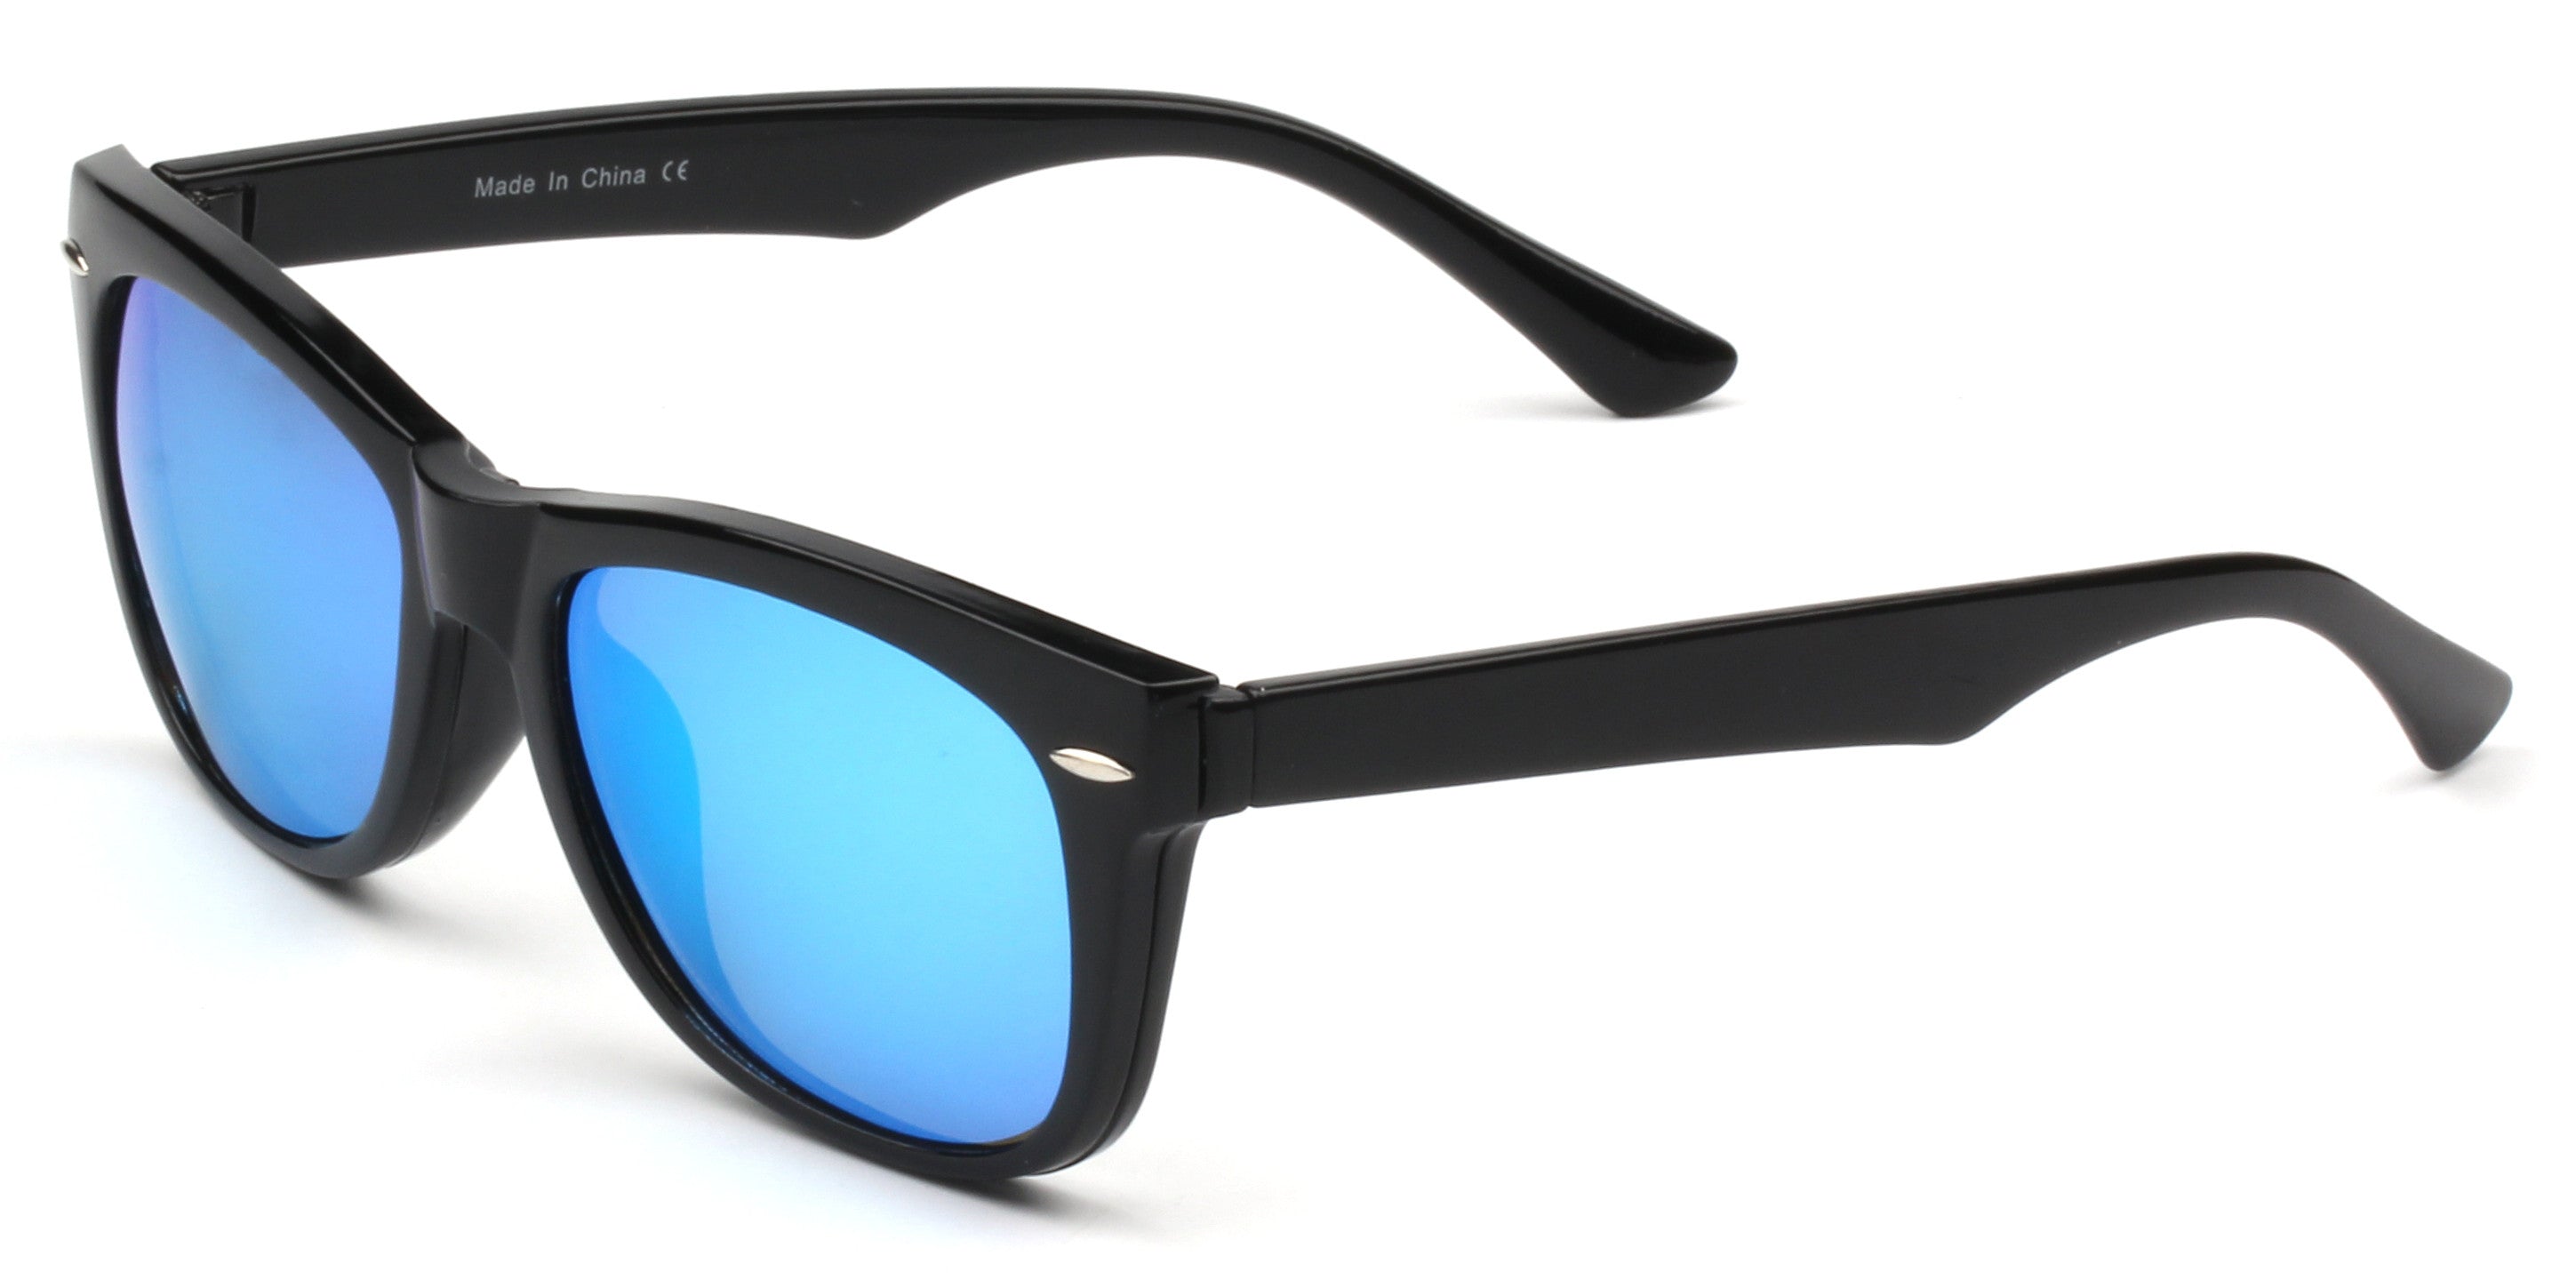 PS2017 - Polarized CLIP-ON Lens Rectangular Mirrored Fashion SUNGLASSES Black frame with blue coatin